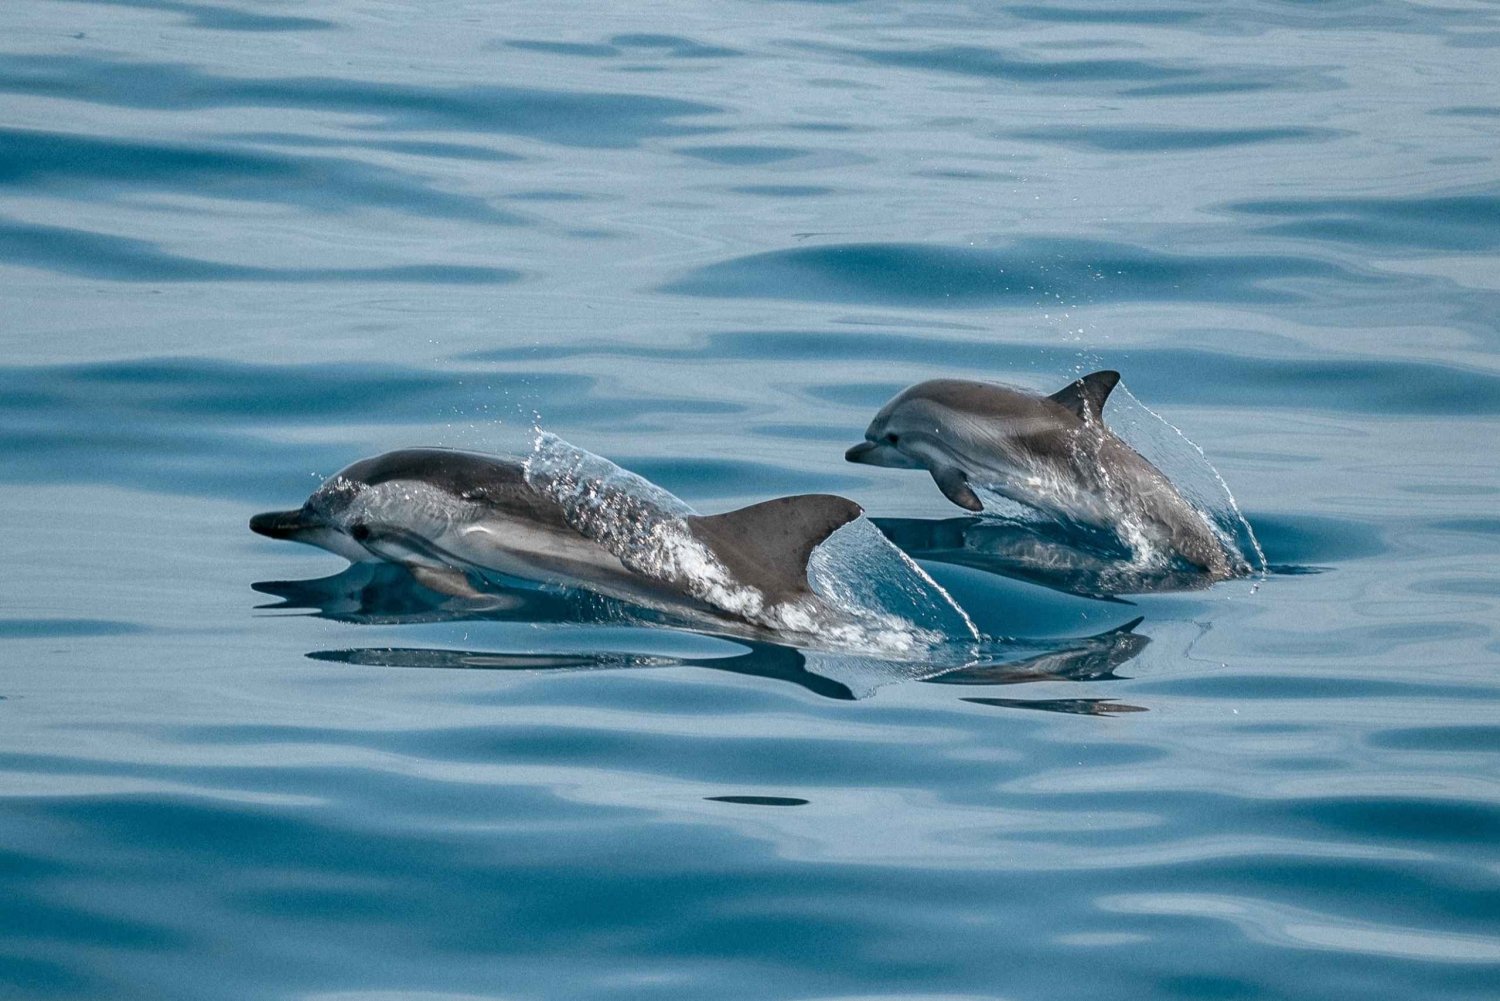 Sotogrande: Delphinbeobachtung Bootsfahrt mit Getränk